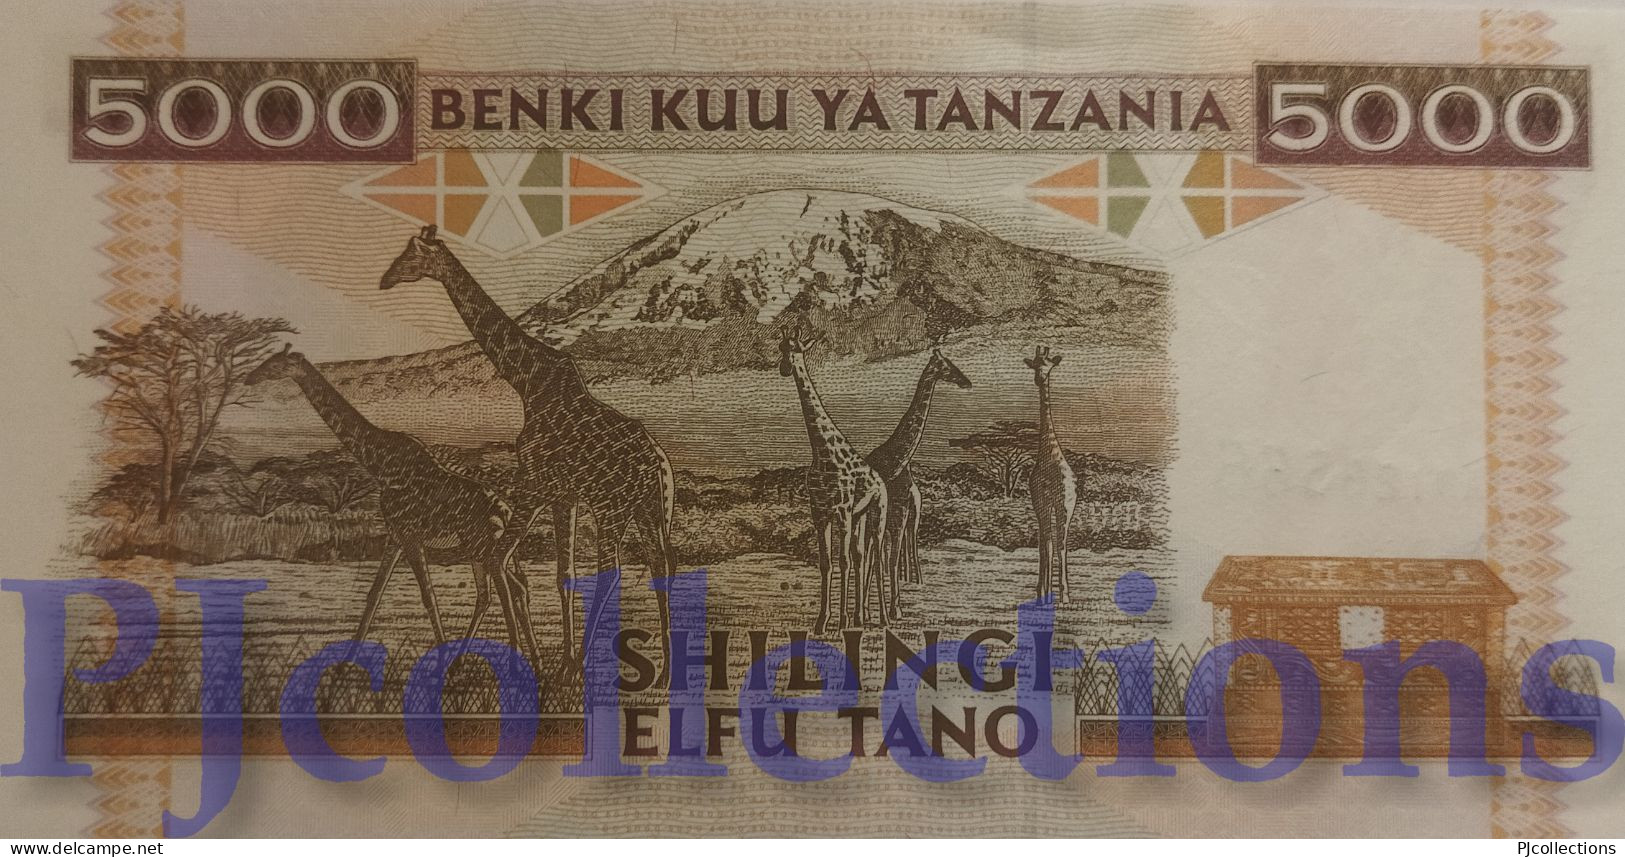 TANZANIA 5000 SHILINGI 1995 PICK 28 UNC - Tansania